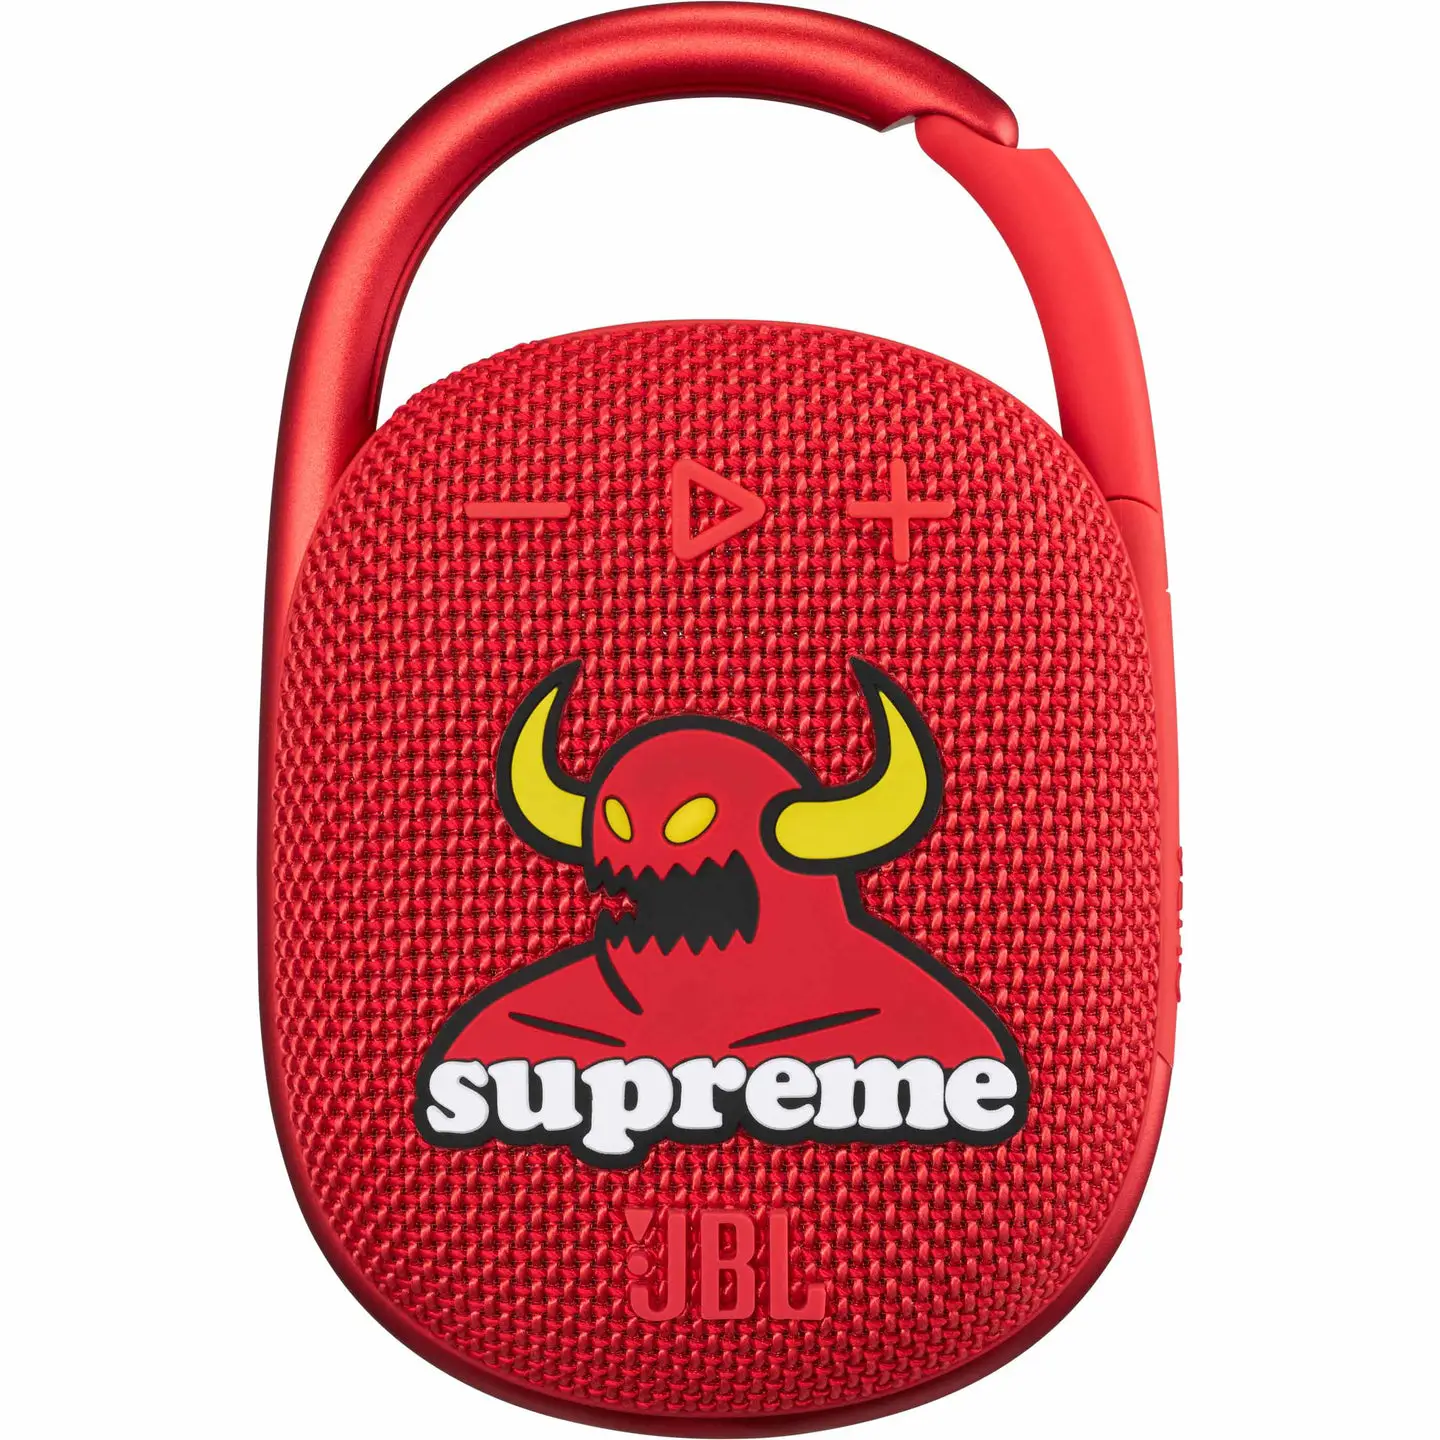 Supreme x Toy Machine JBL Clip 